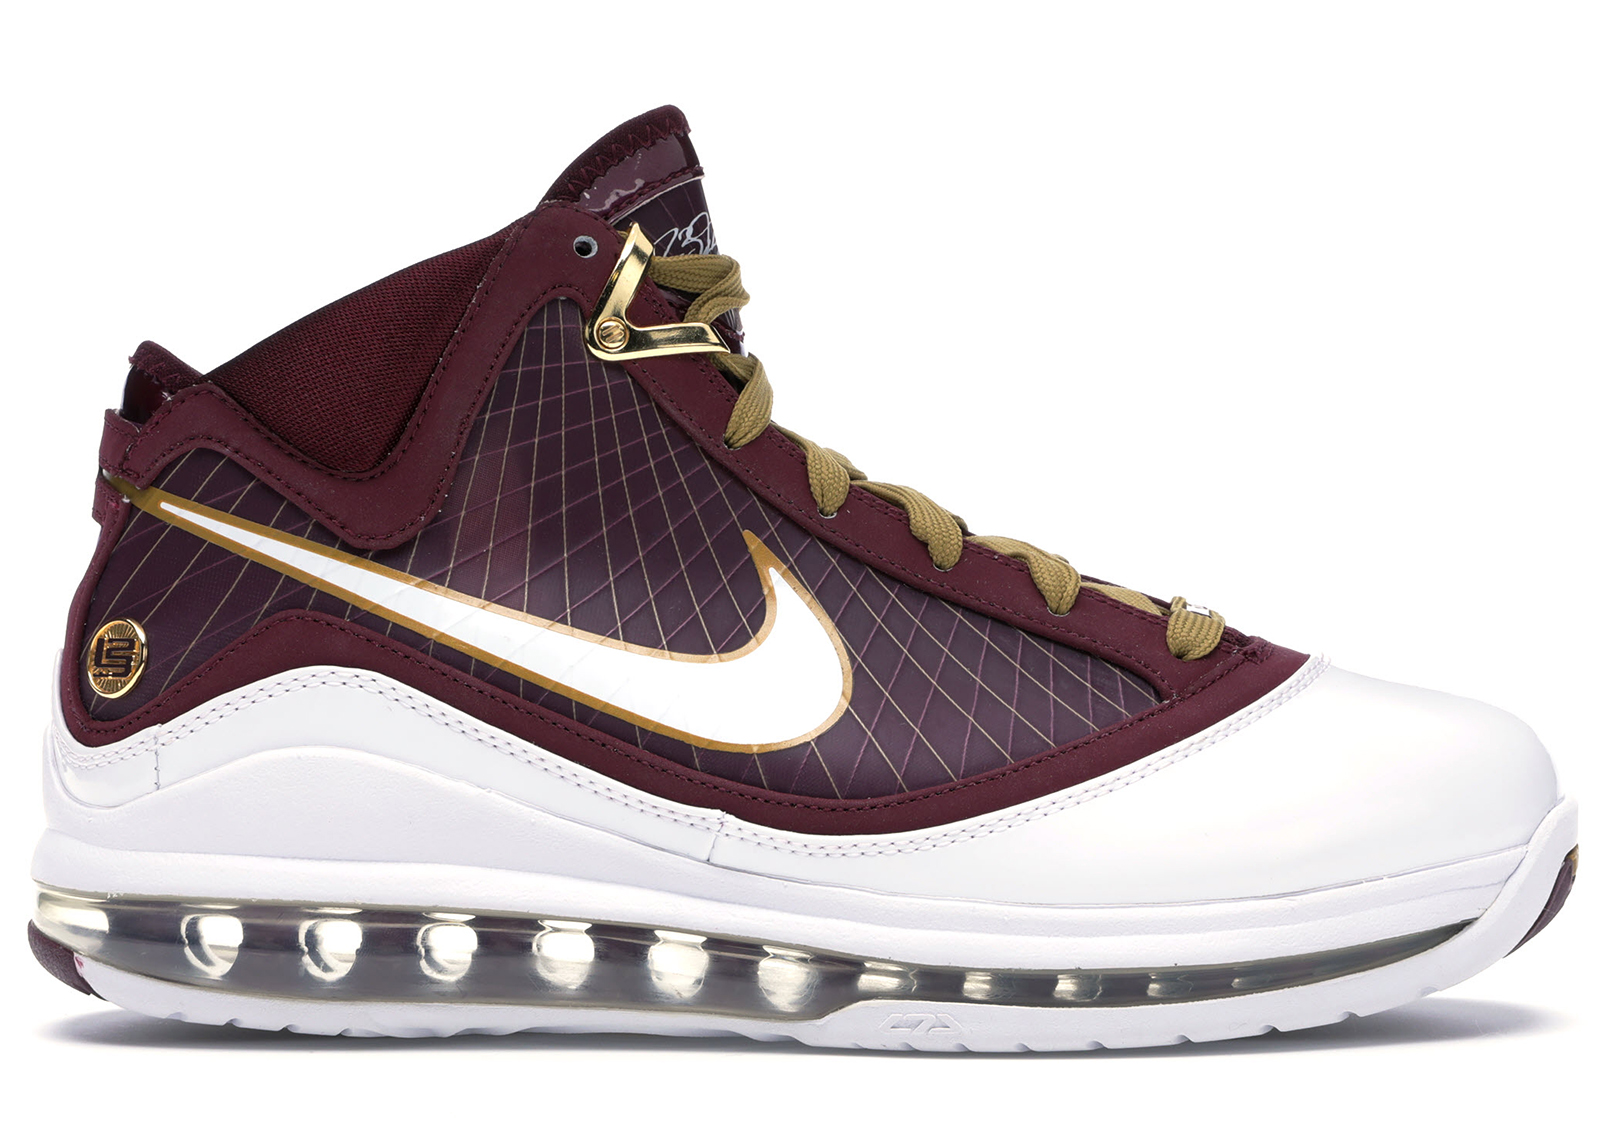 Nike LeBron 7 Acquista calzature 